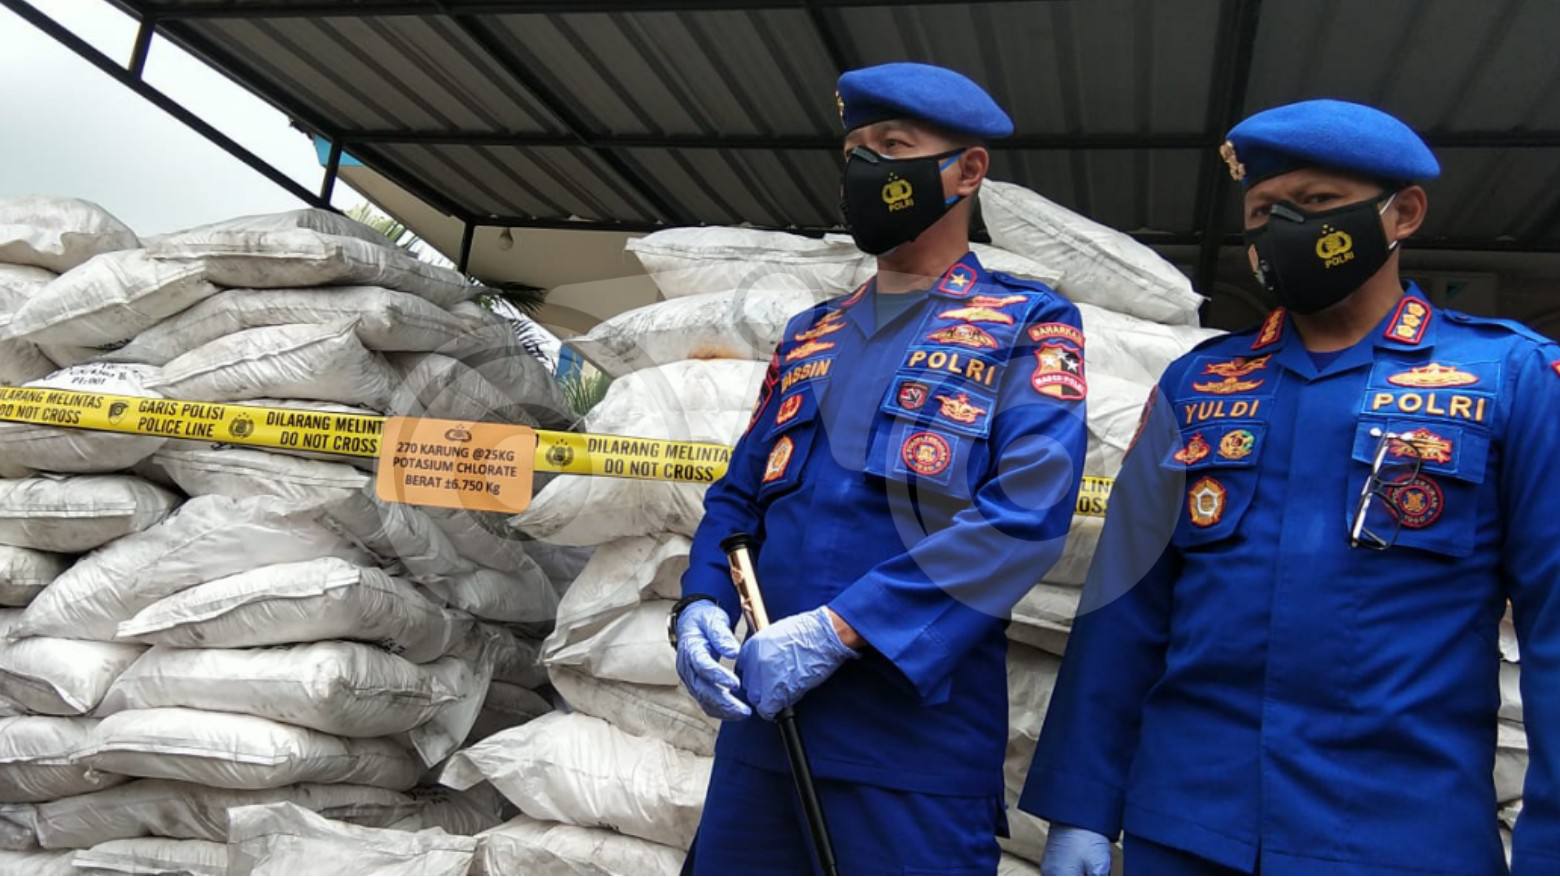 Jadi Distributor Bahan Peledak untuk Perorangan, Dirut PT DTMK Surabaya Ditetapkan Tersangka